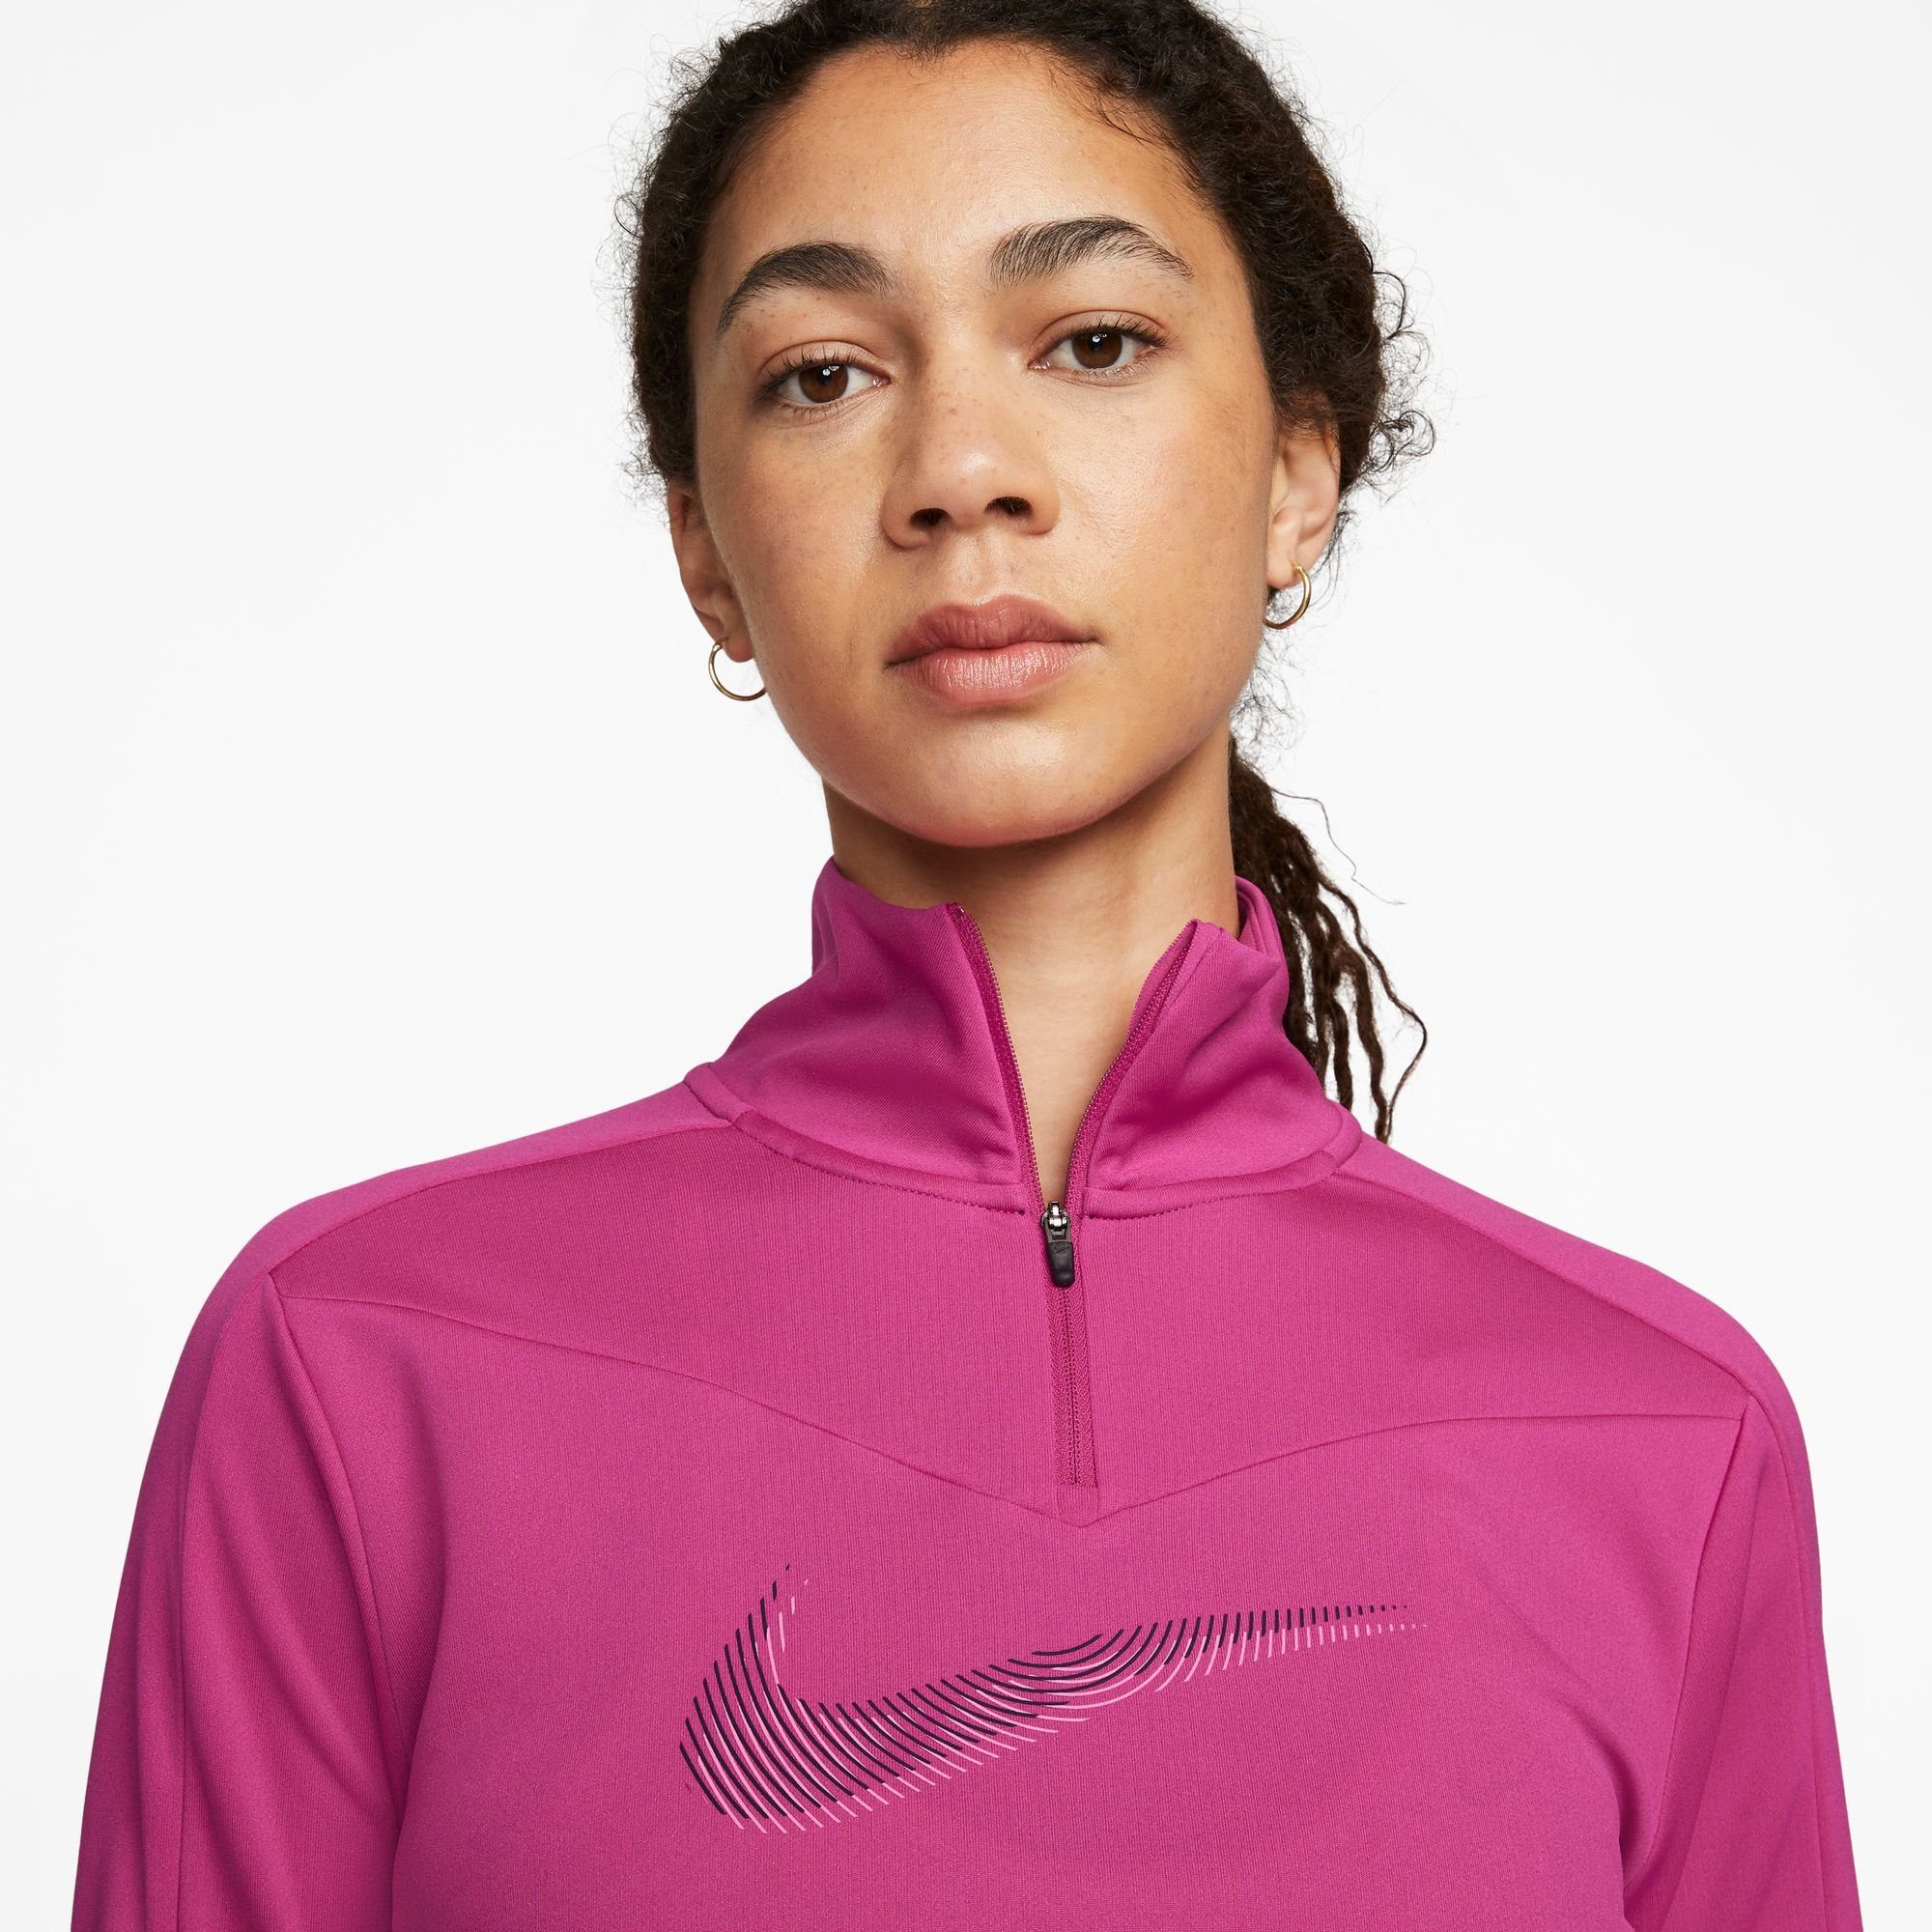 Nike Runningshirt DRI-FIT SWOOSH WOMEN'S 1 -ZIP RUNNING TOP